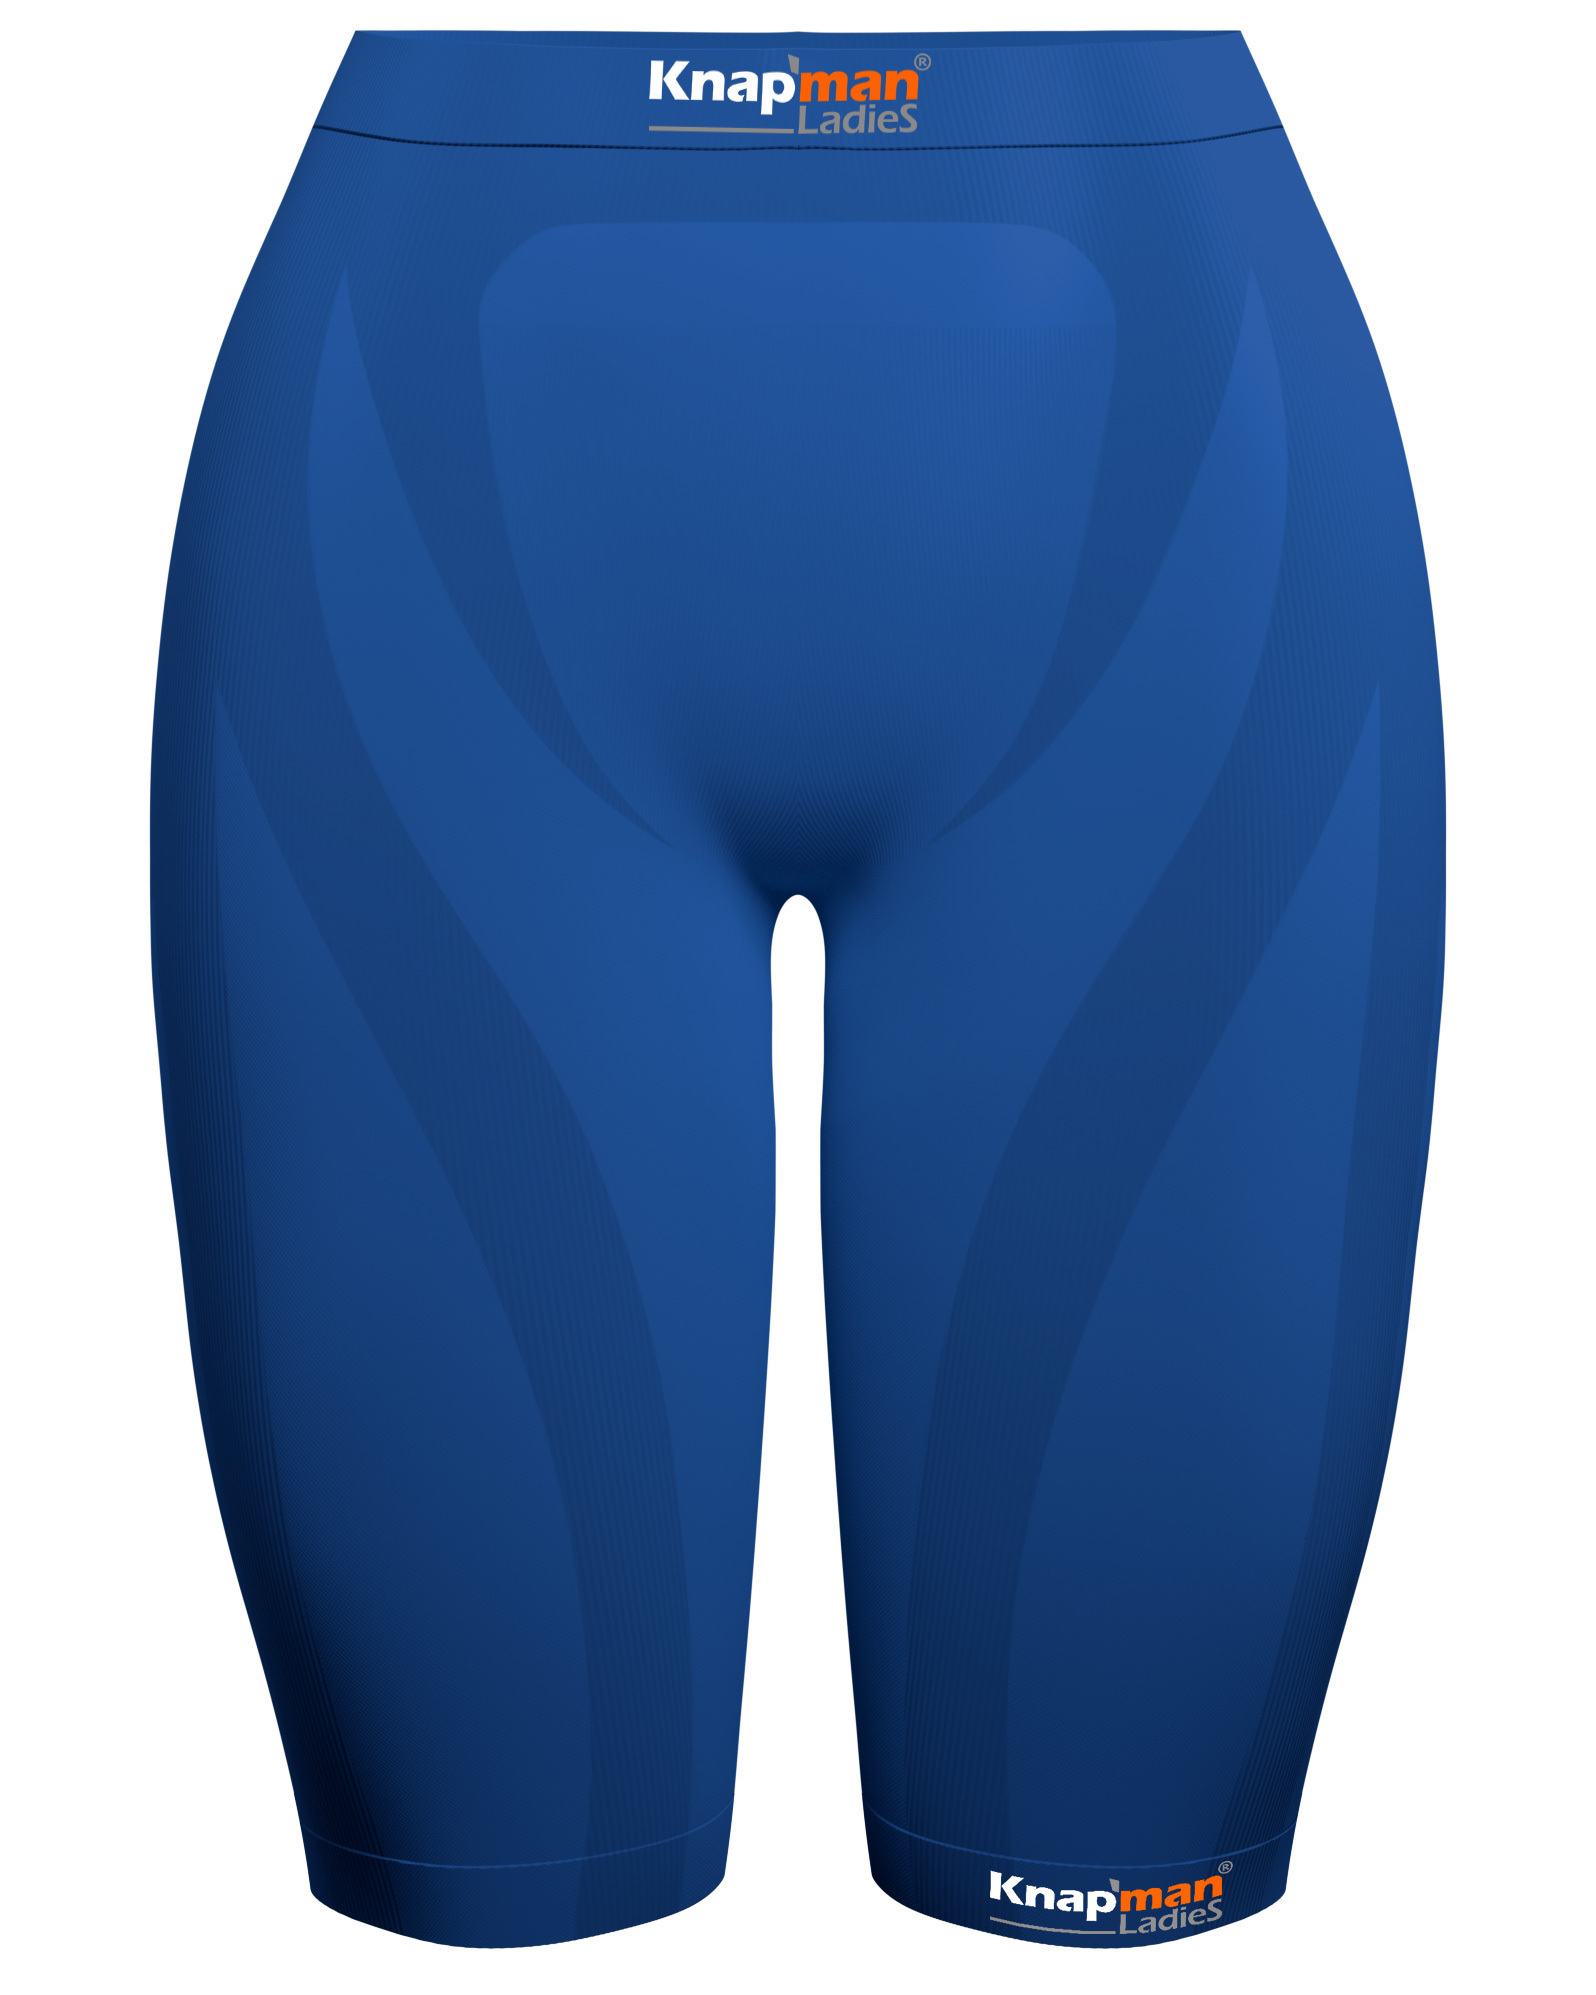 Knap'man Women's Compression Shorts Royal Blue - 45%